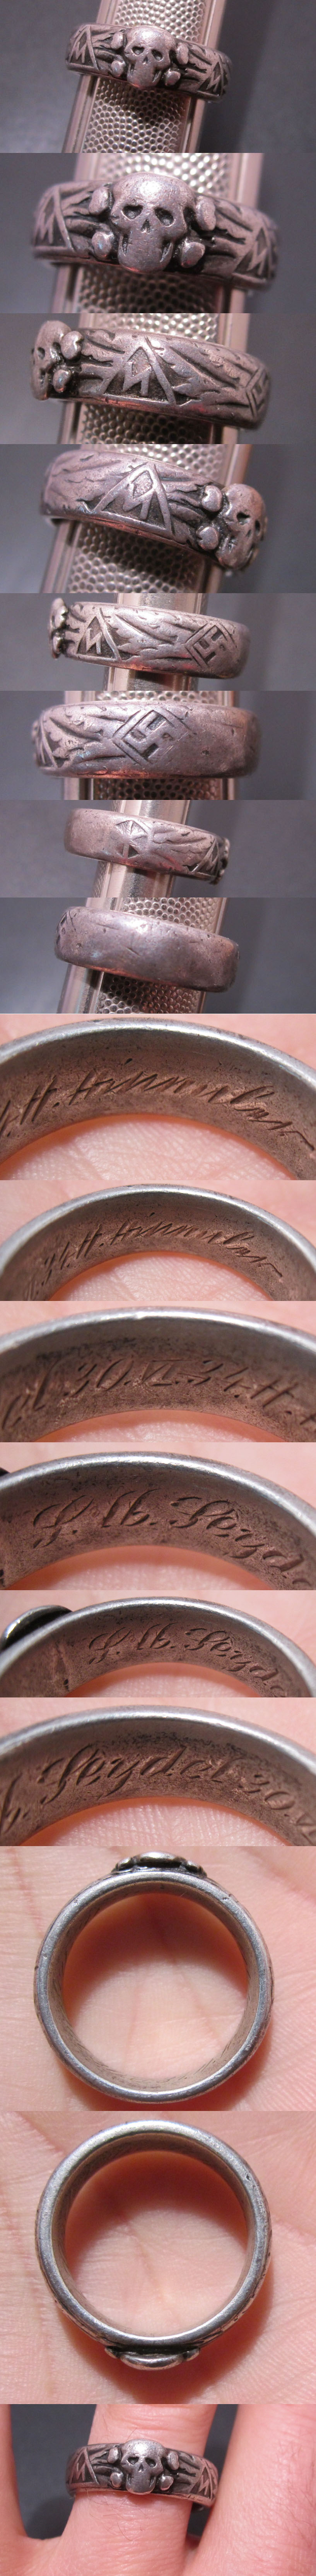 Wilhelm Seydel's SS Honor Ring